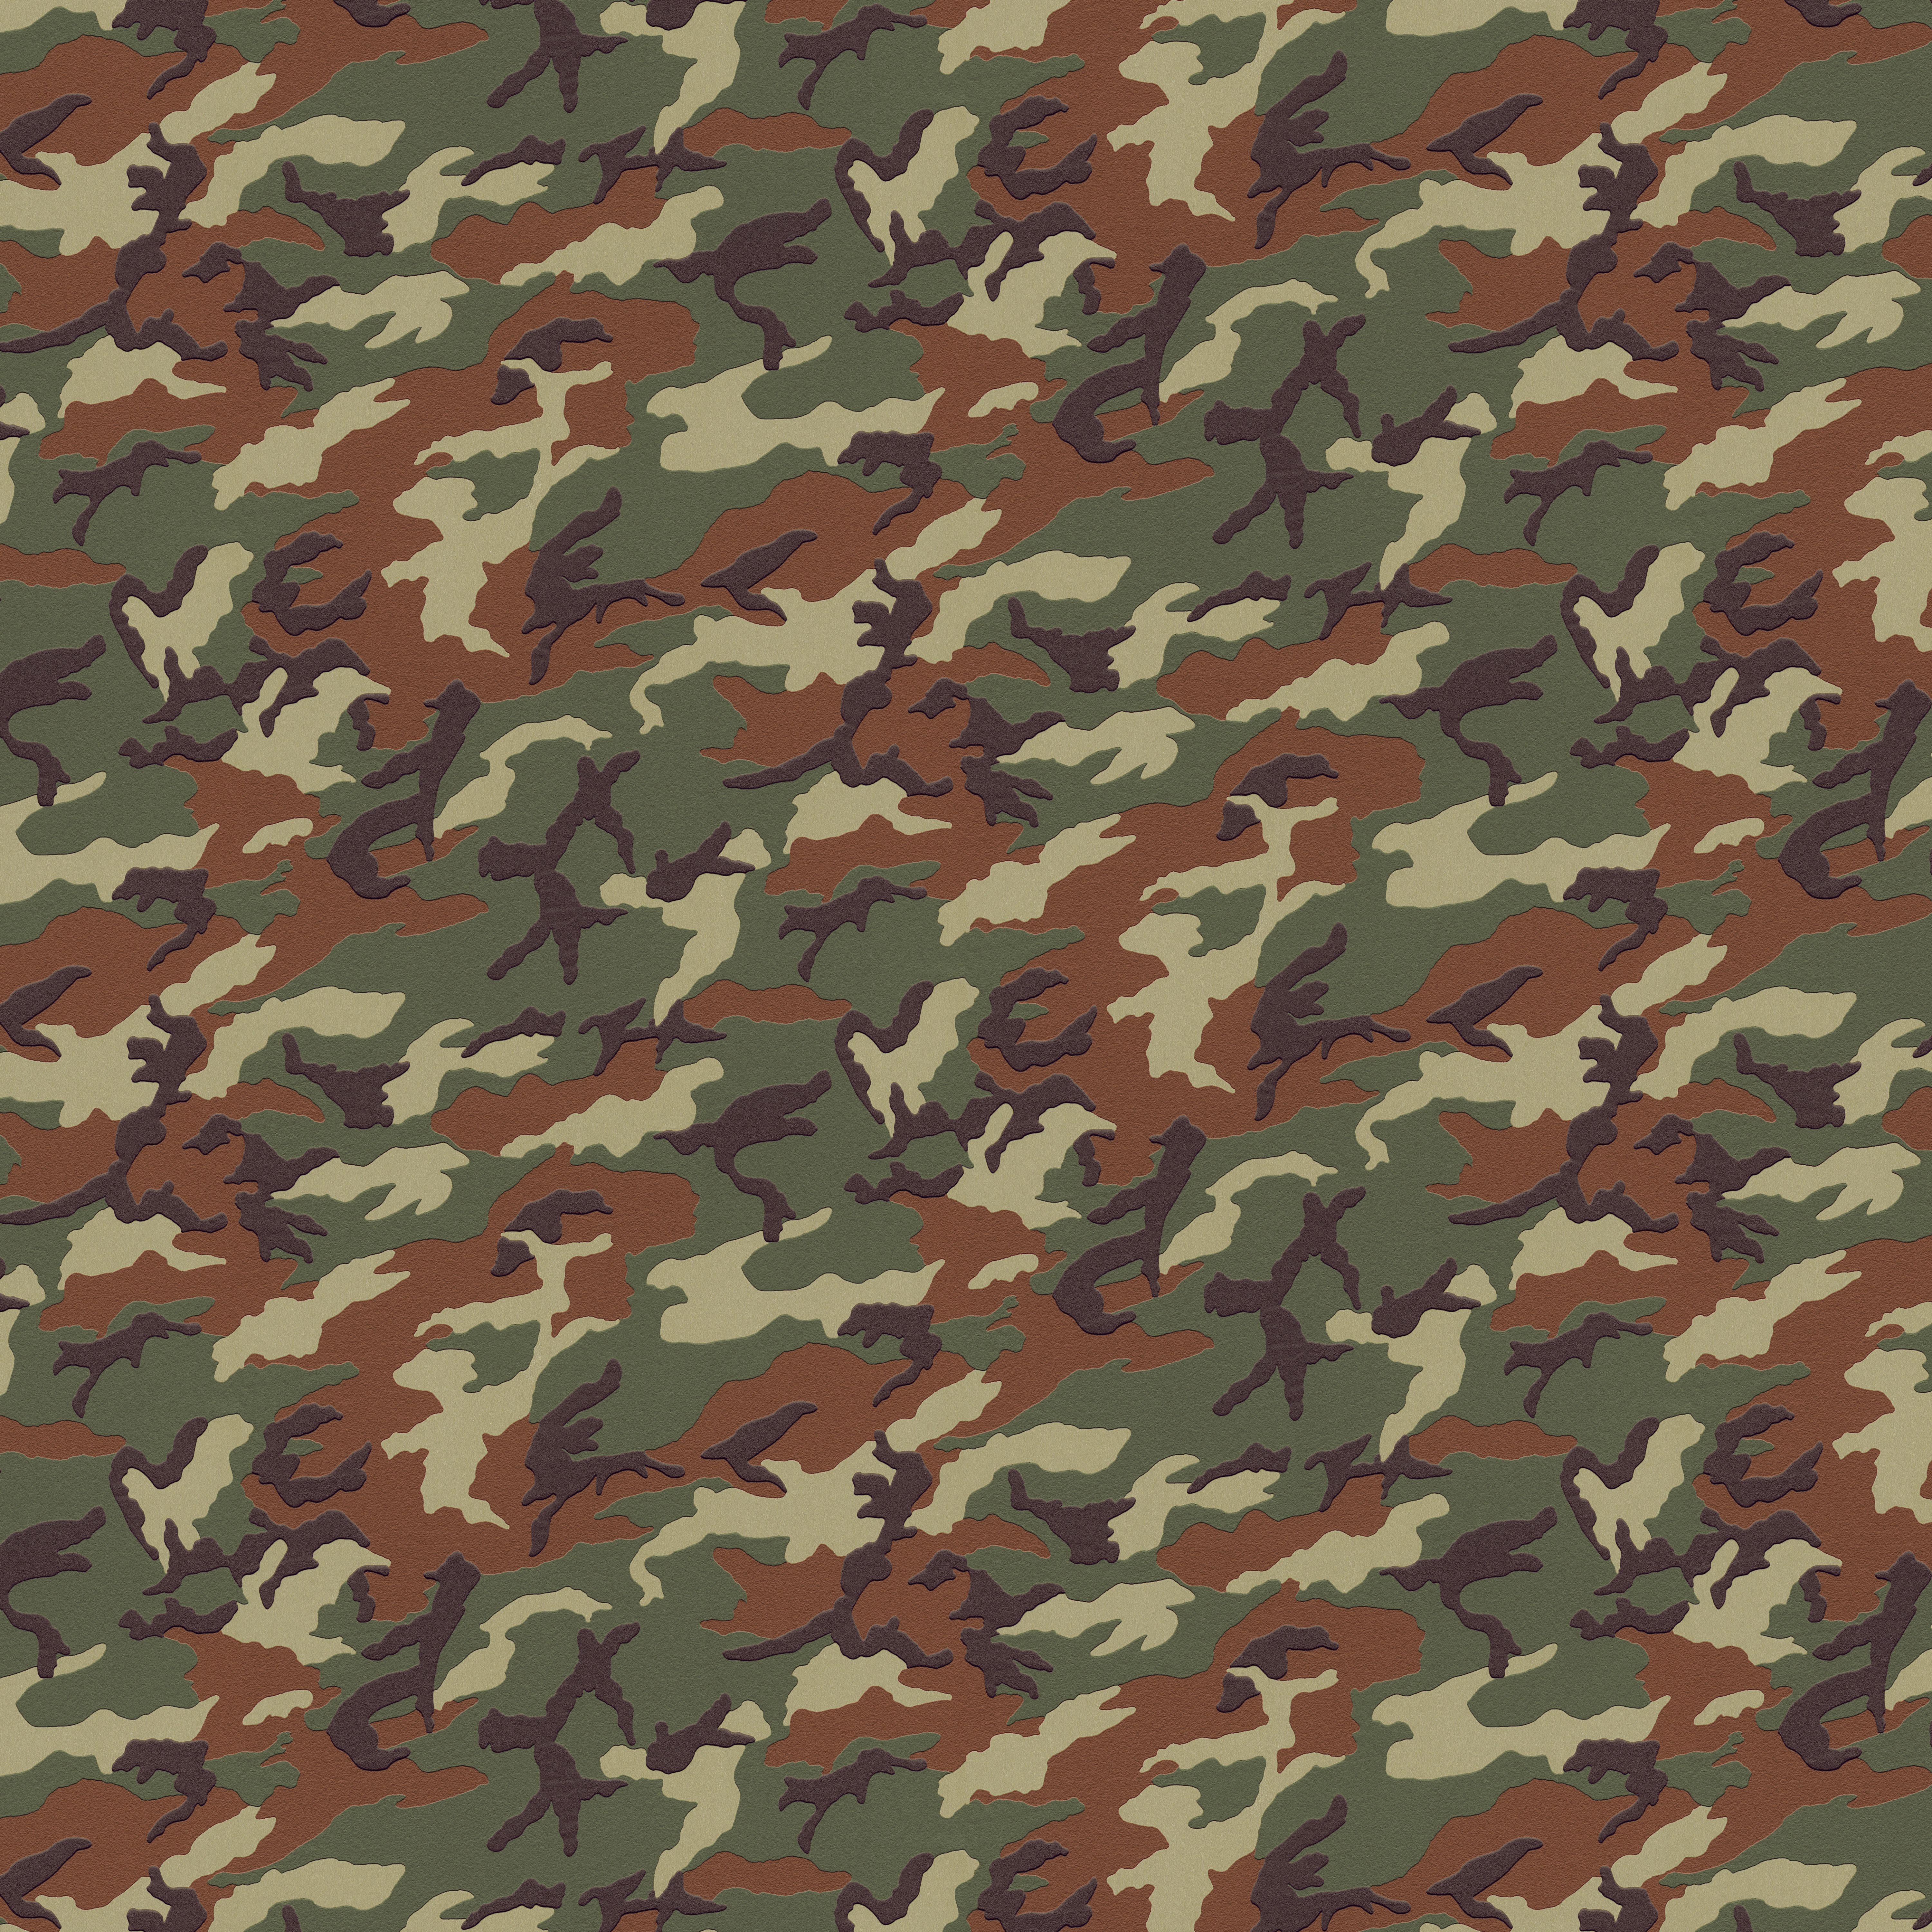 Vliestapete Camouflage Grün B/l: Ca. 53x1005 Cm Vliestapete_36940-6 - braun/grün (53,00/1005,00cm)